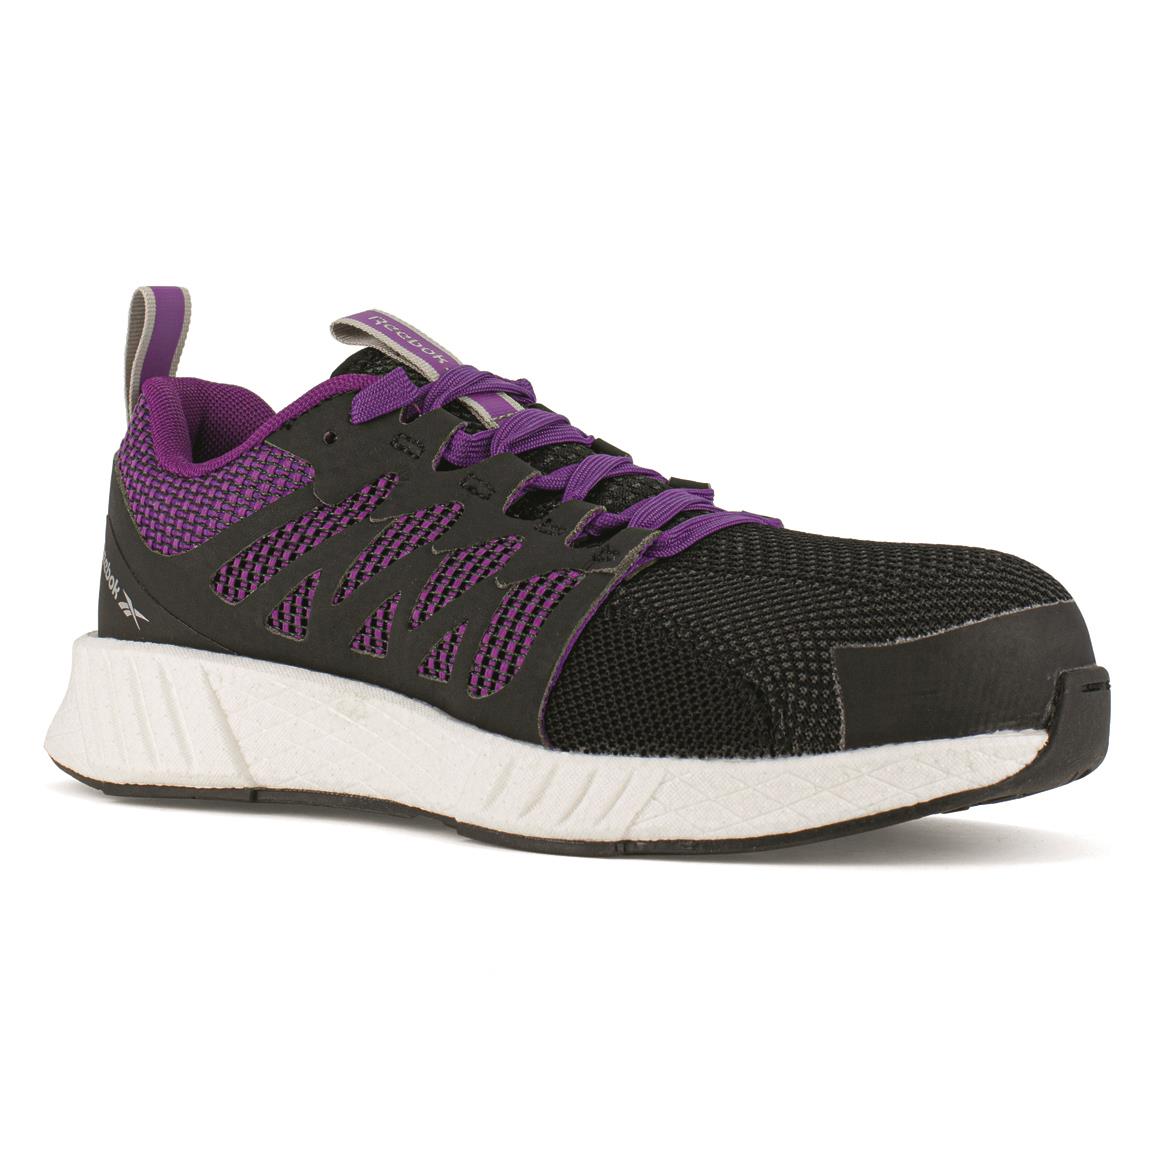 Reebok Women's Fusion Flexweave Comp Toe Athletic Work Shoes, Black/Purple